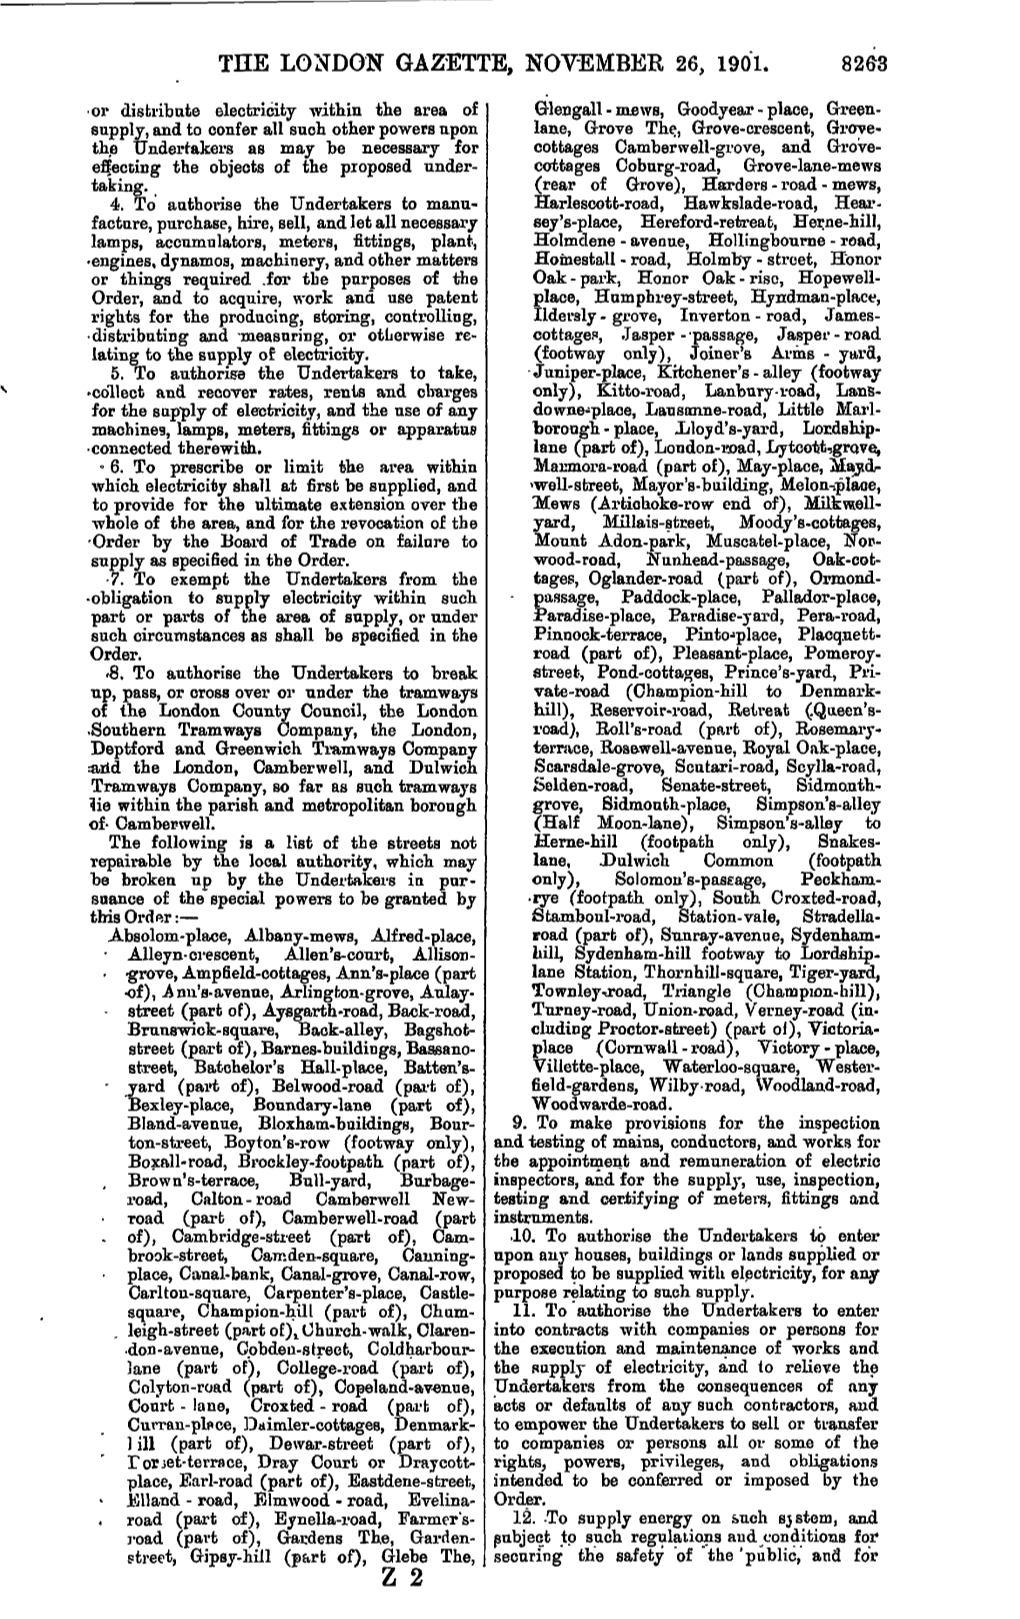 The London Gazette, November 26, 1901. 8263